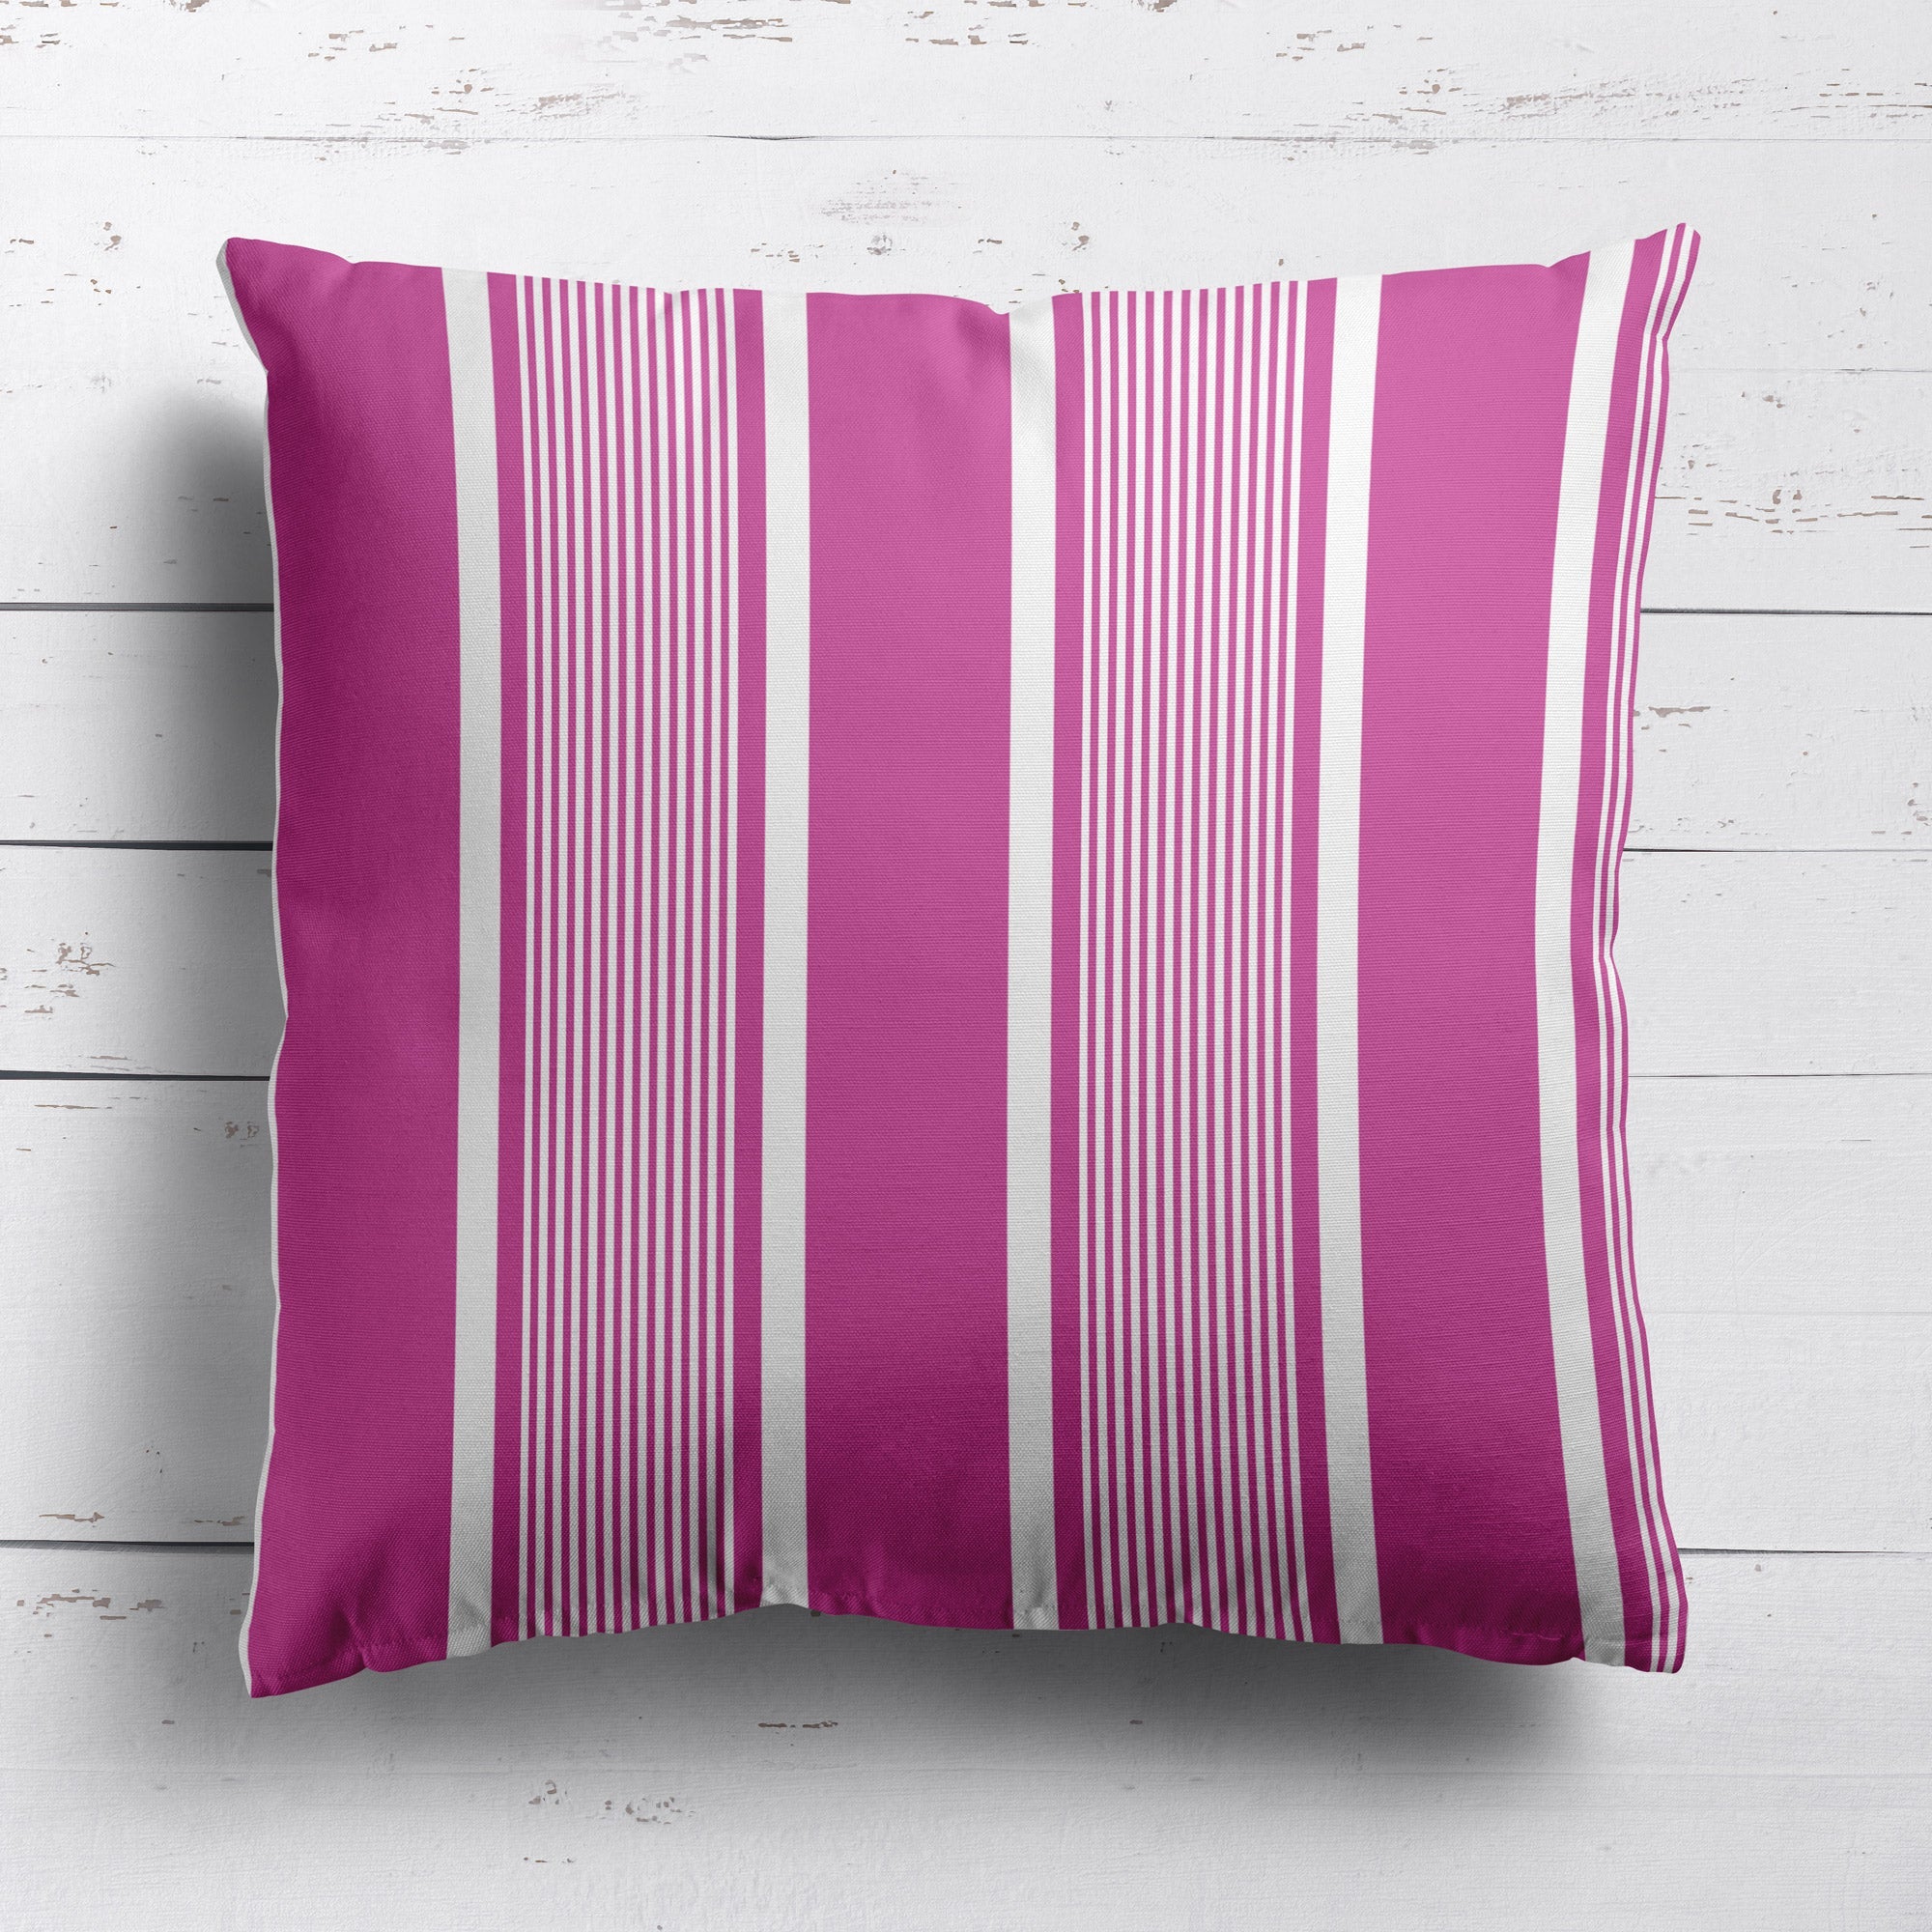 Deckchair Stripe Cushion - Pinks - Hydrangea Lane Home